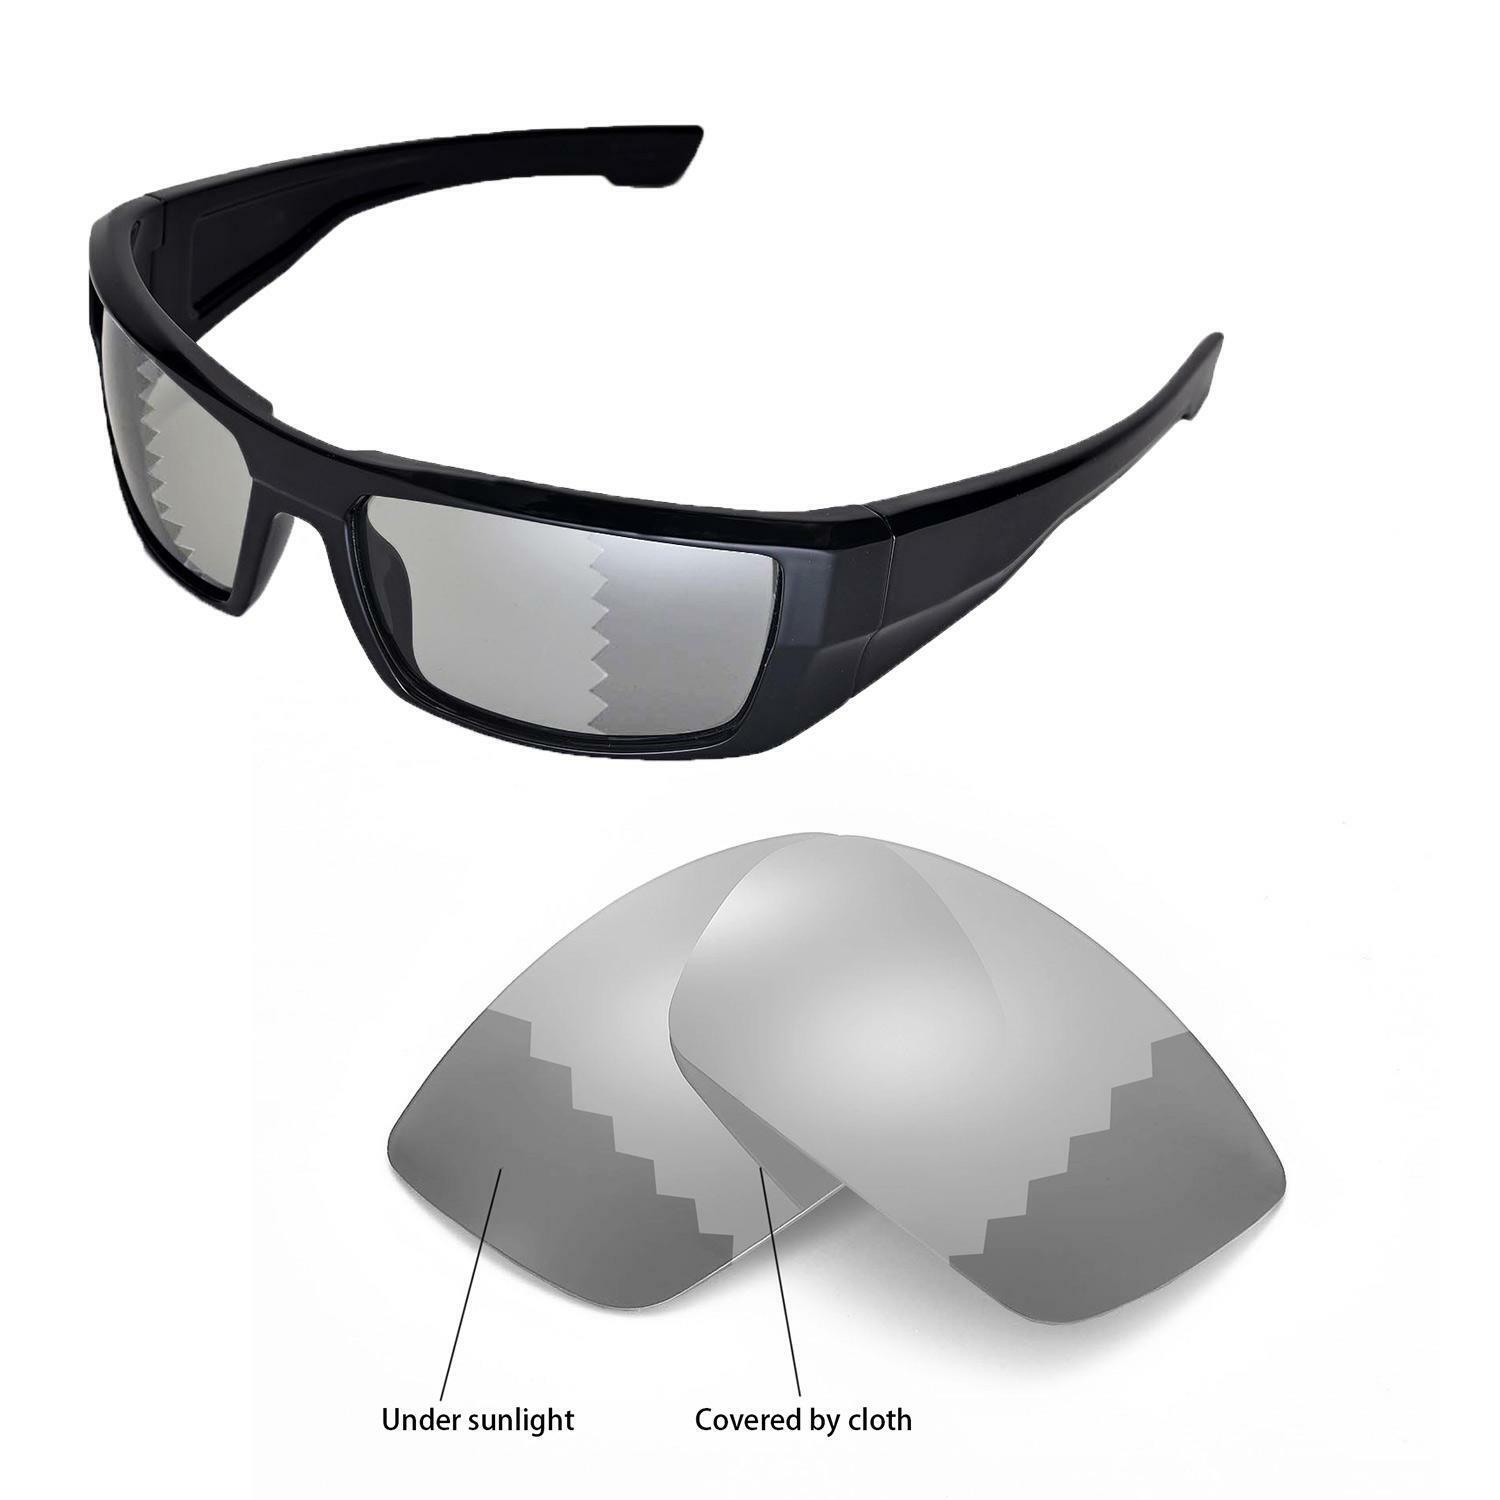 New WL Polarized Transition/Photochromic Lenses For Spy Optic DIRK Sunglasses